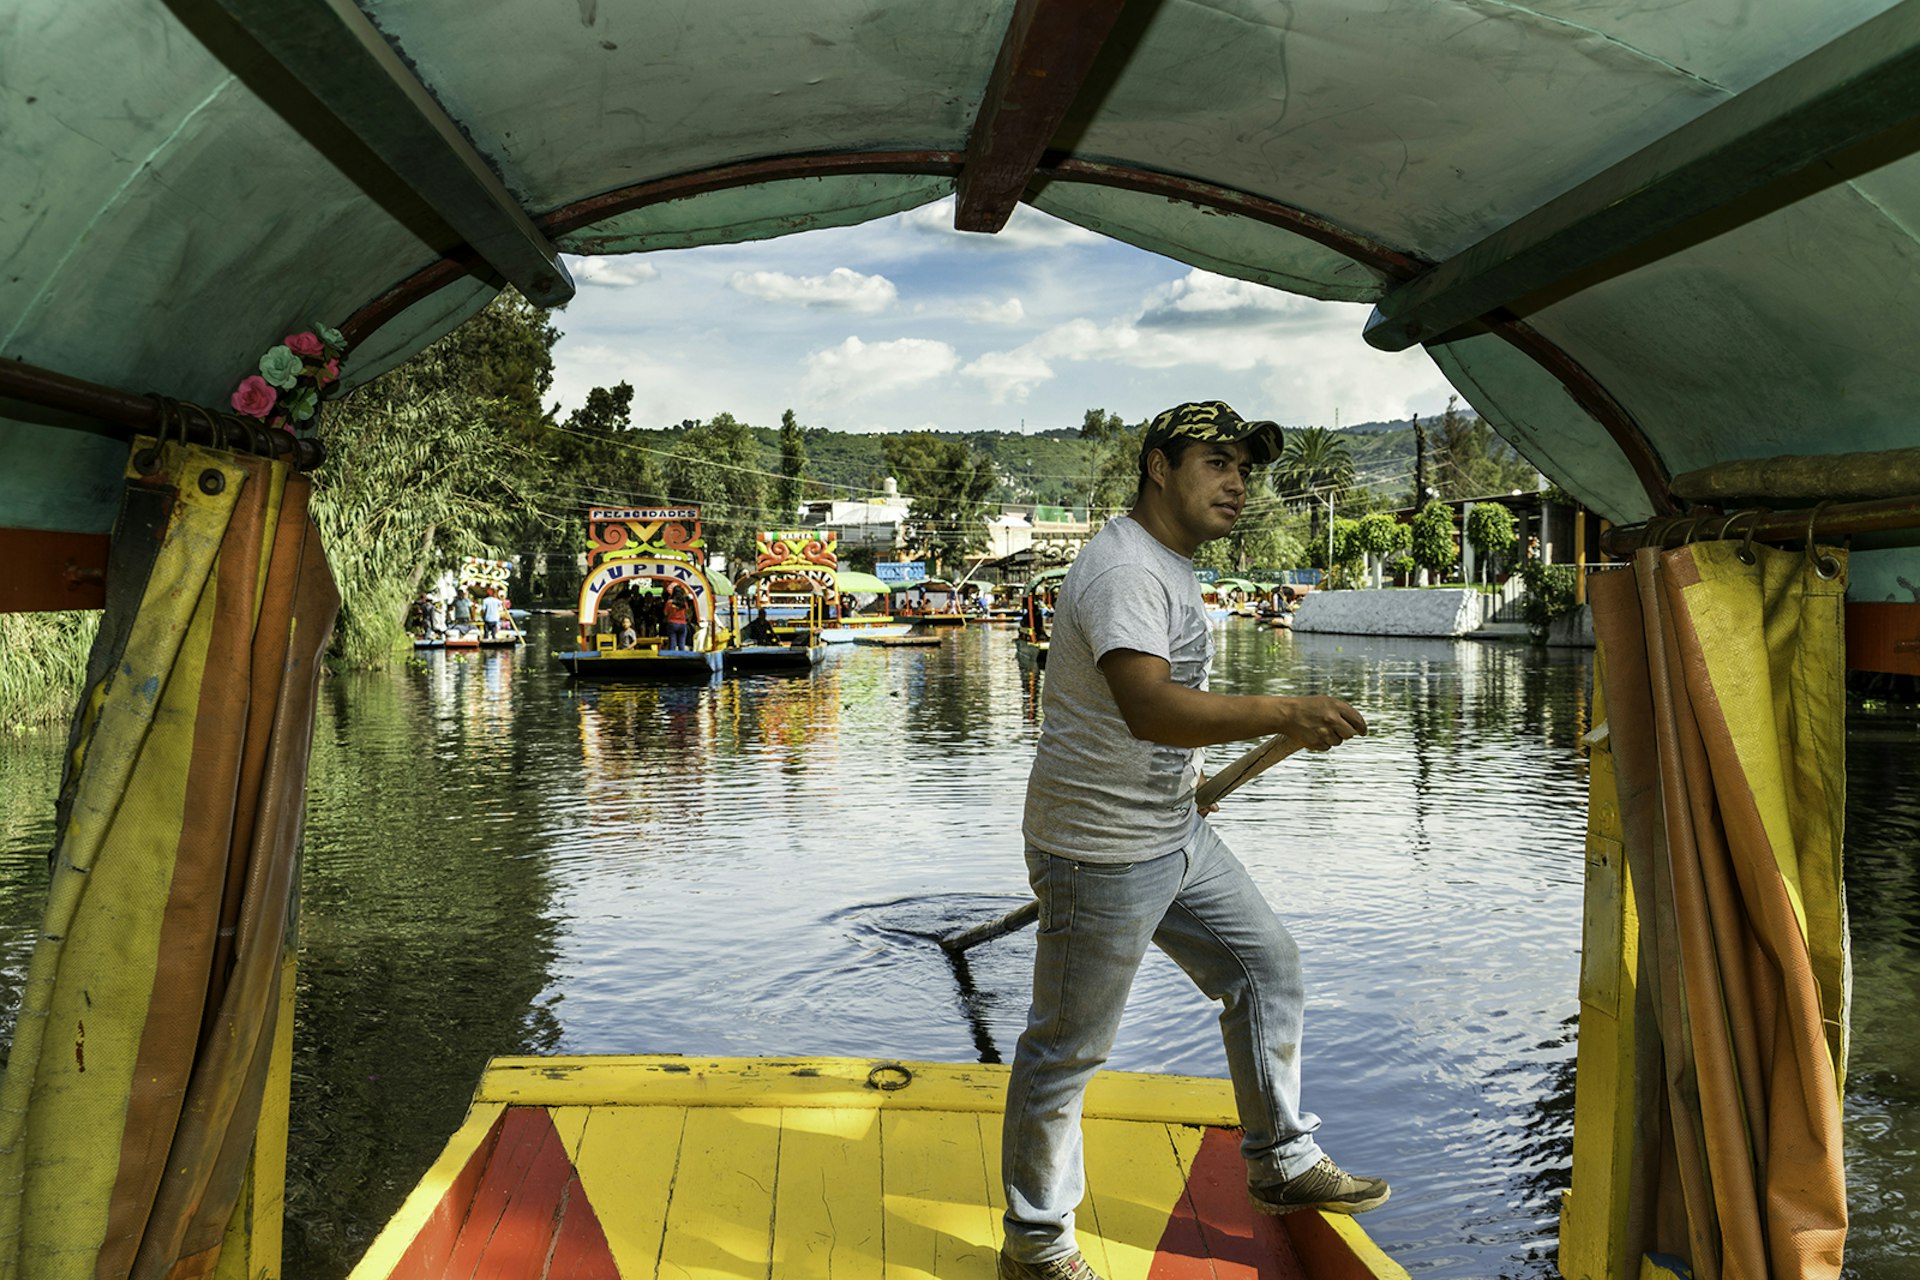 A boatman on Mexico City's Xochimilco Canals